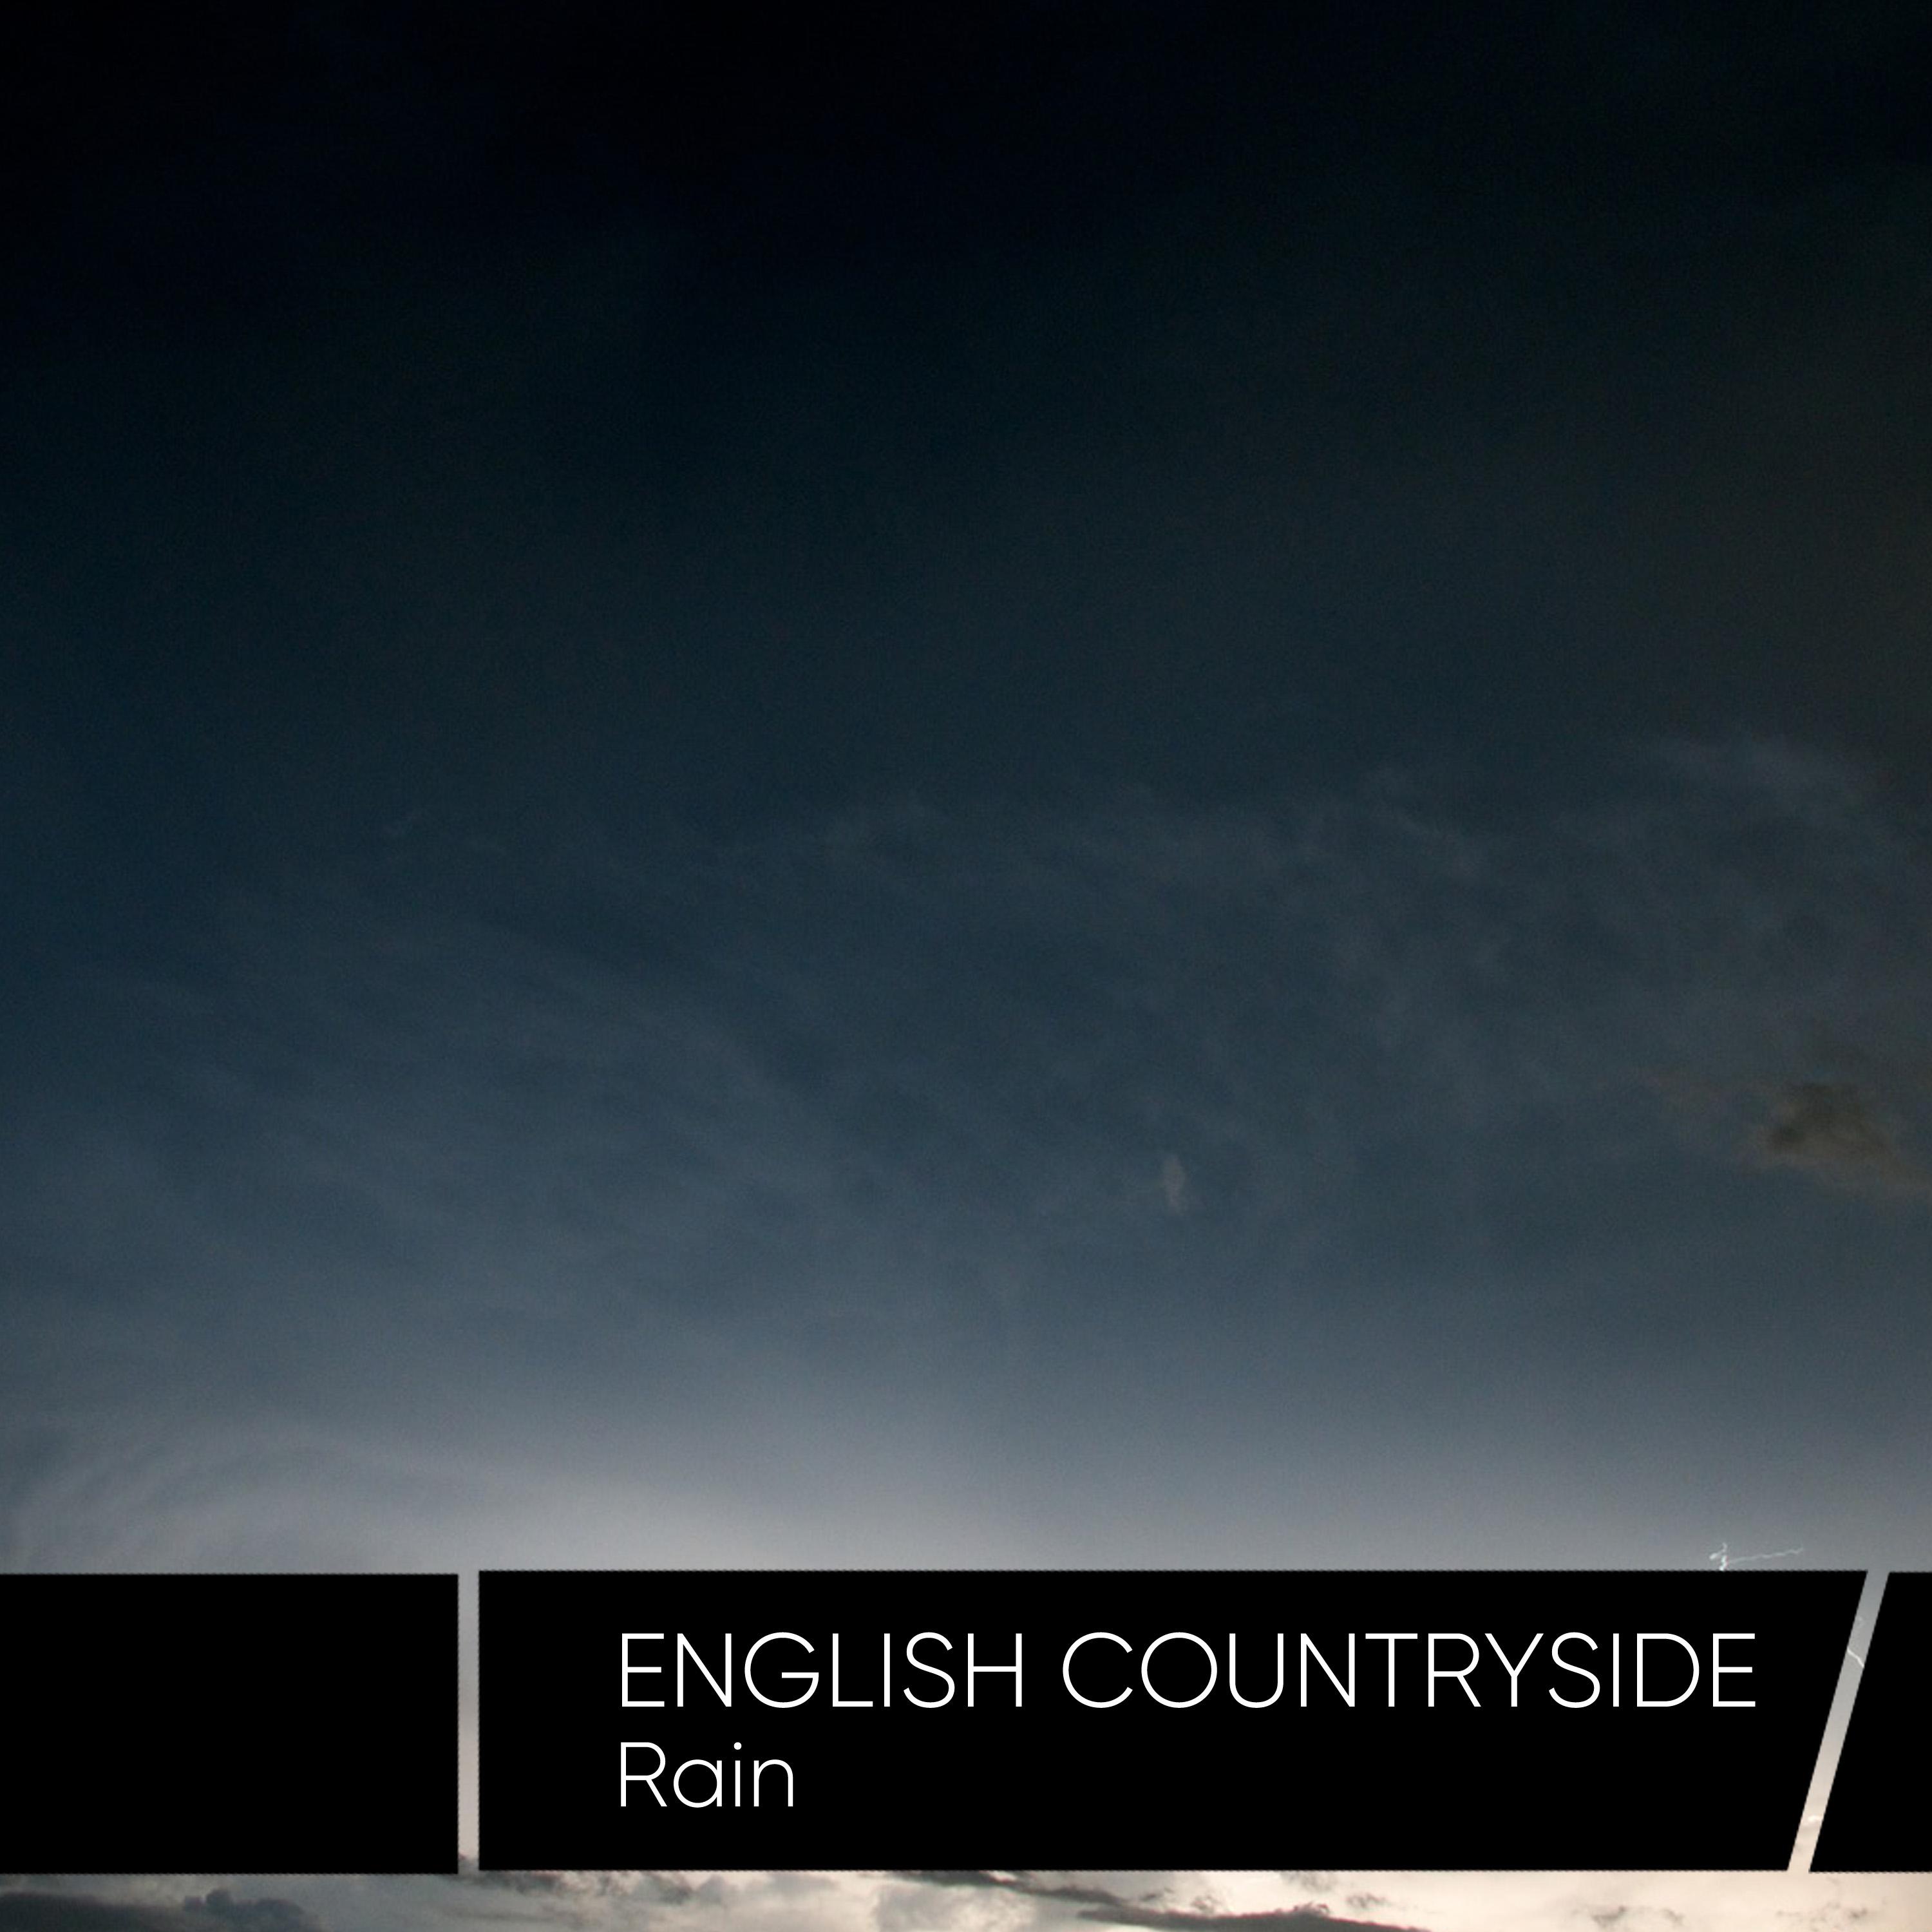 English Countryside Rain and Thunder